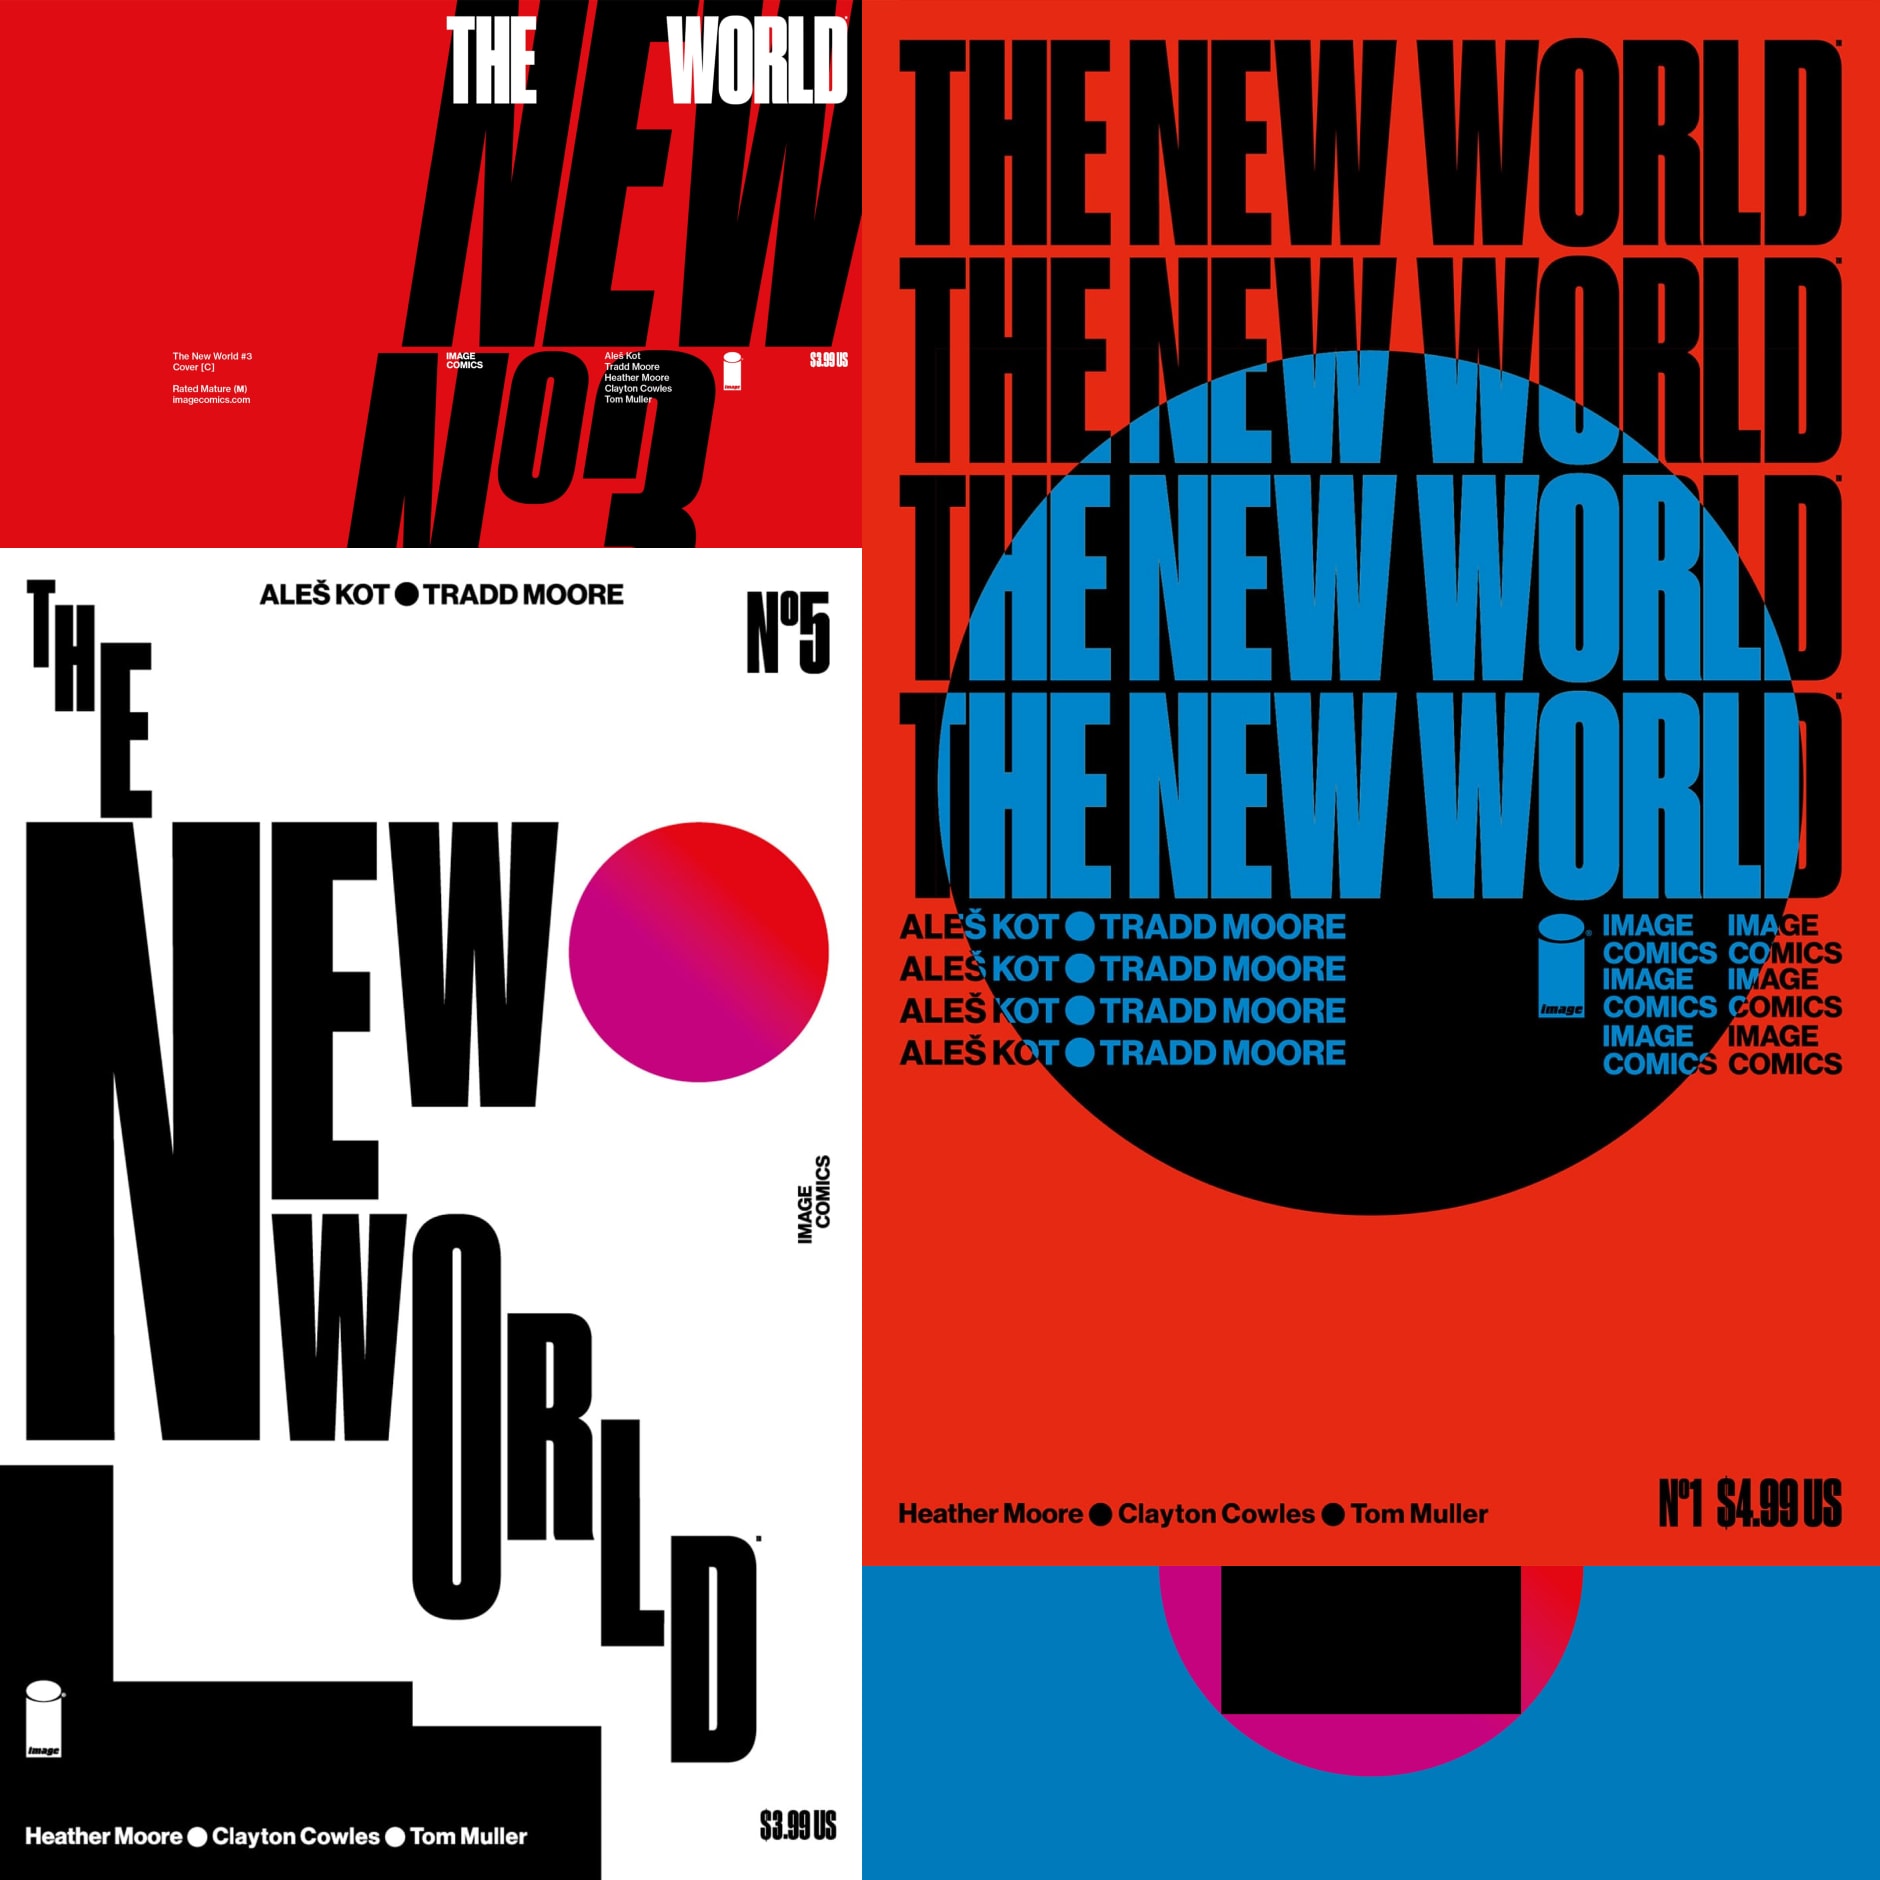 The New World design